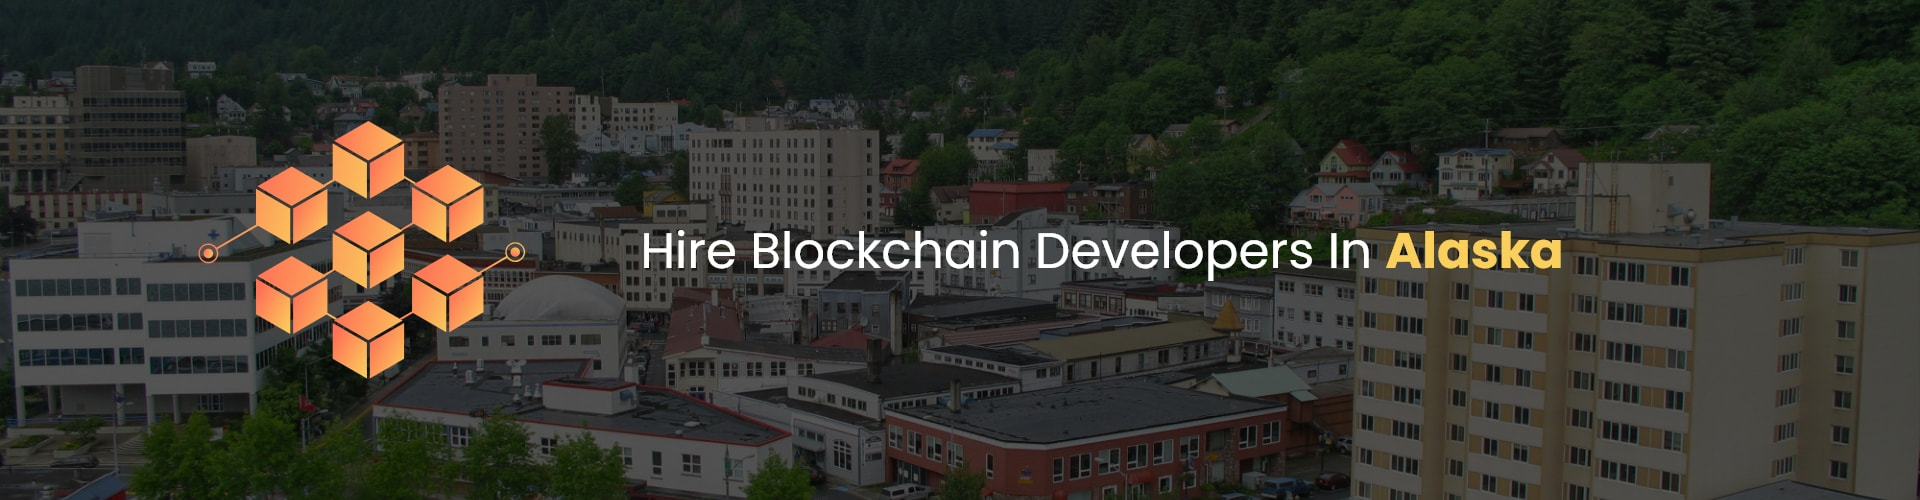 hire blockchain developers in alaska